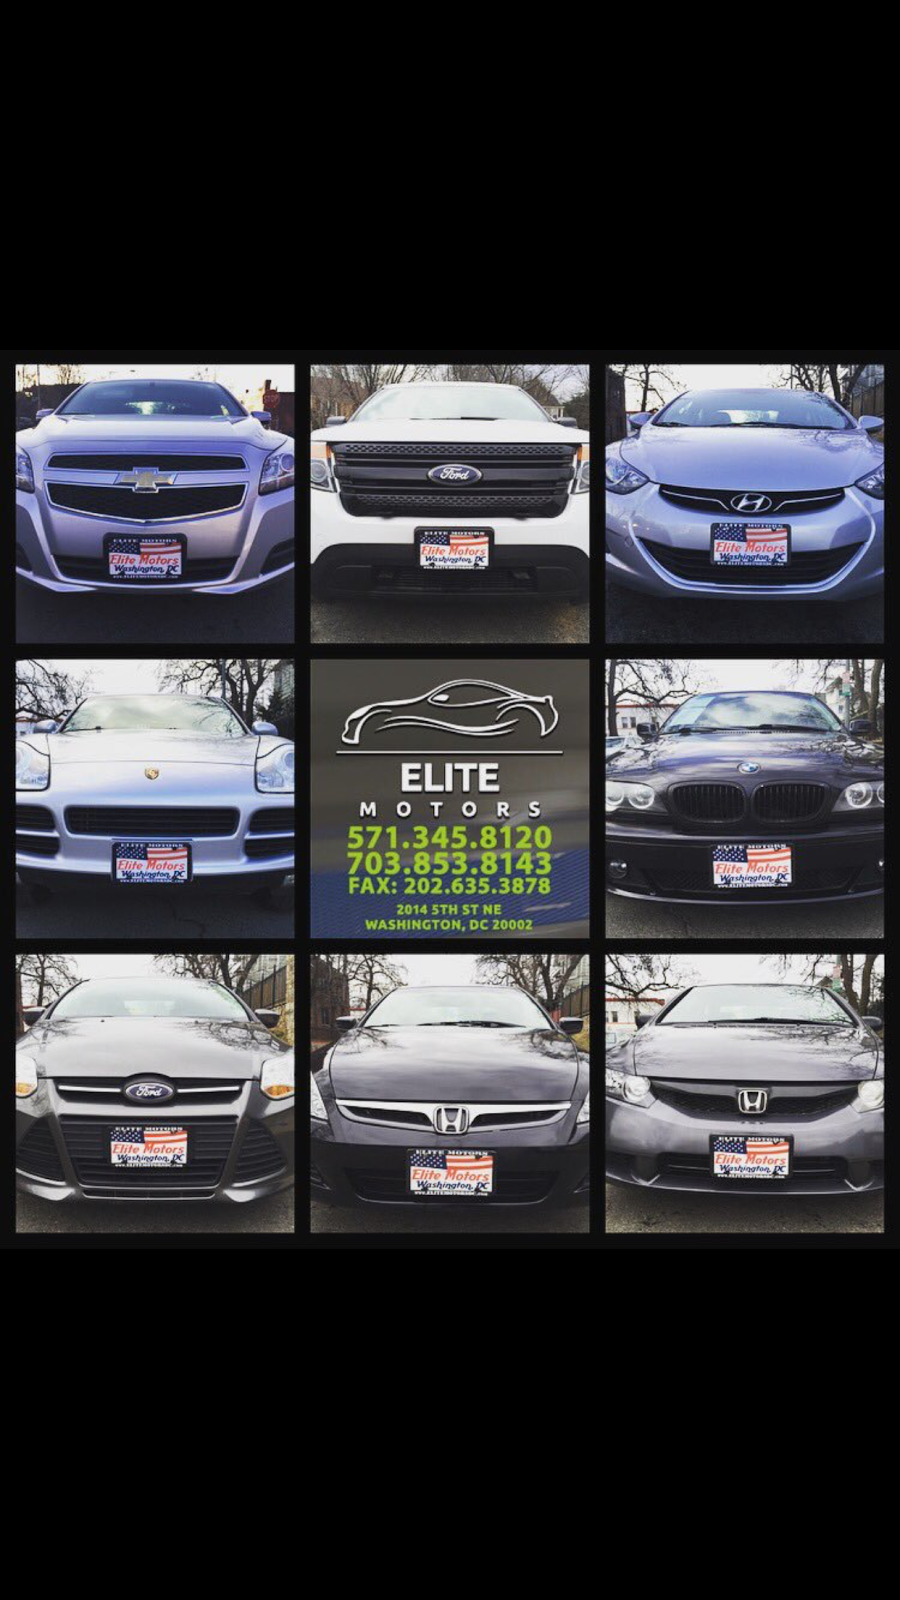 Elite Motors | 2014 5th St NE, Washington, DC 20002 | Phone: (571) 345-8120